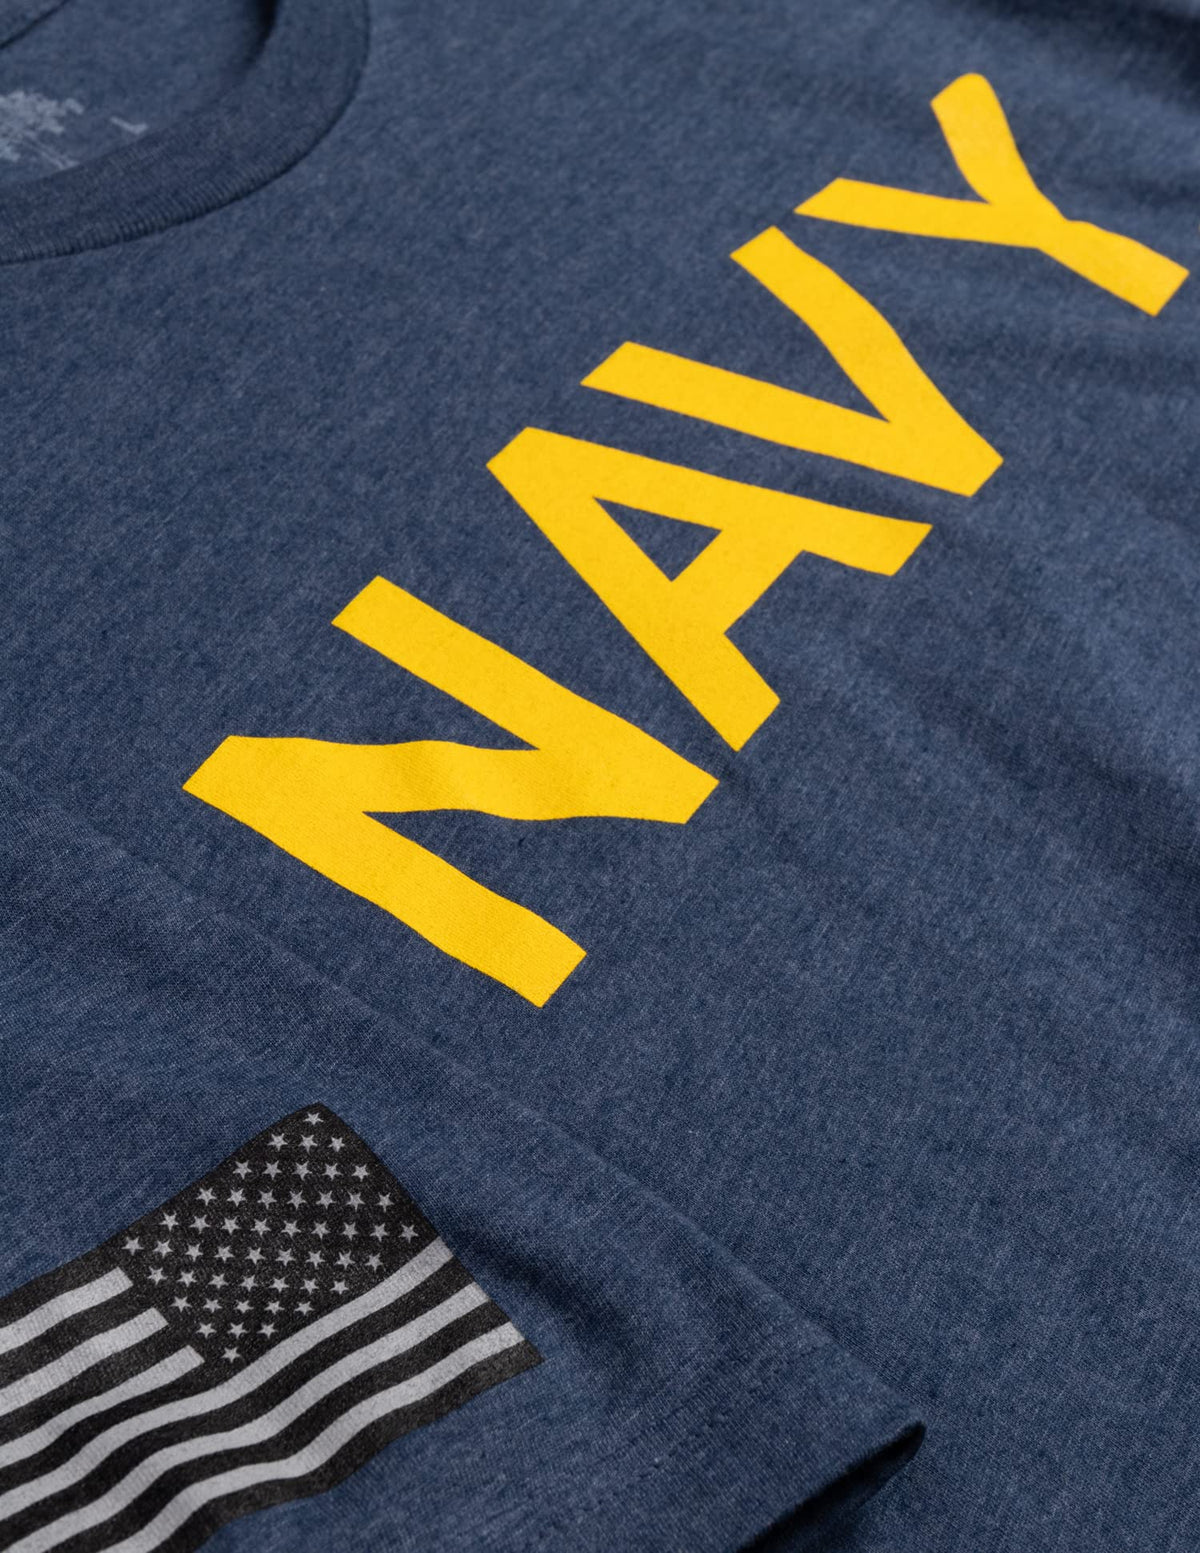 USS Michael Murphy, DDG-112 | U.S. Navy Sailor Veteran USN United States Naval T-shirt for Men Women